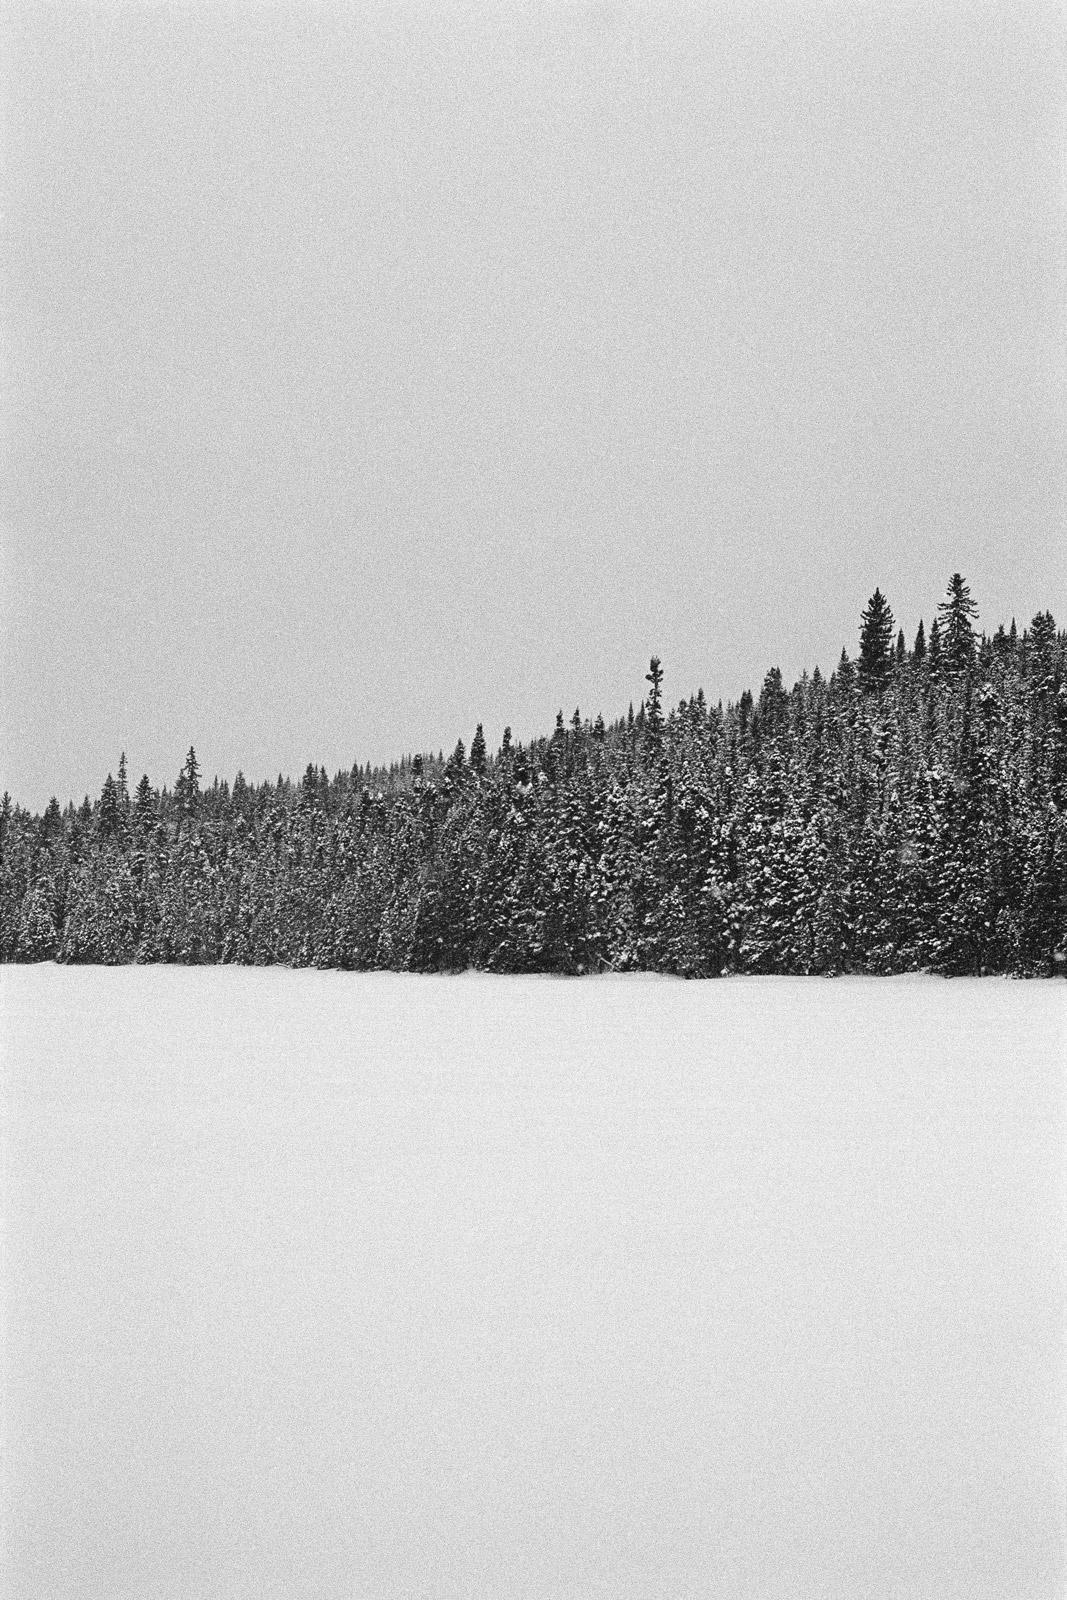 Contemporary Frédéric Tougas, Strophes Pour L’hiver, Now Here, Edition of 11, Photograph For Sale